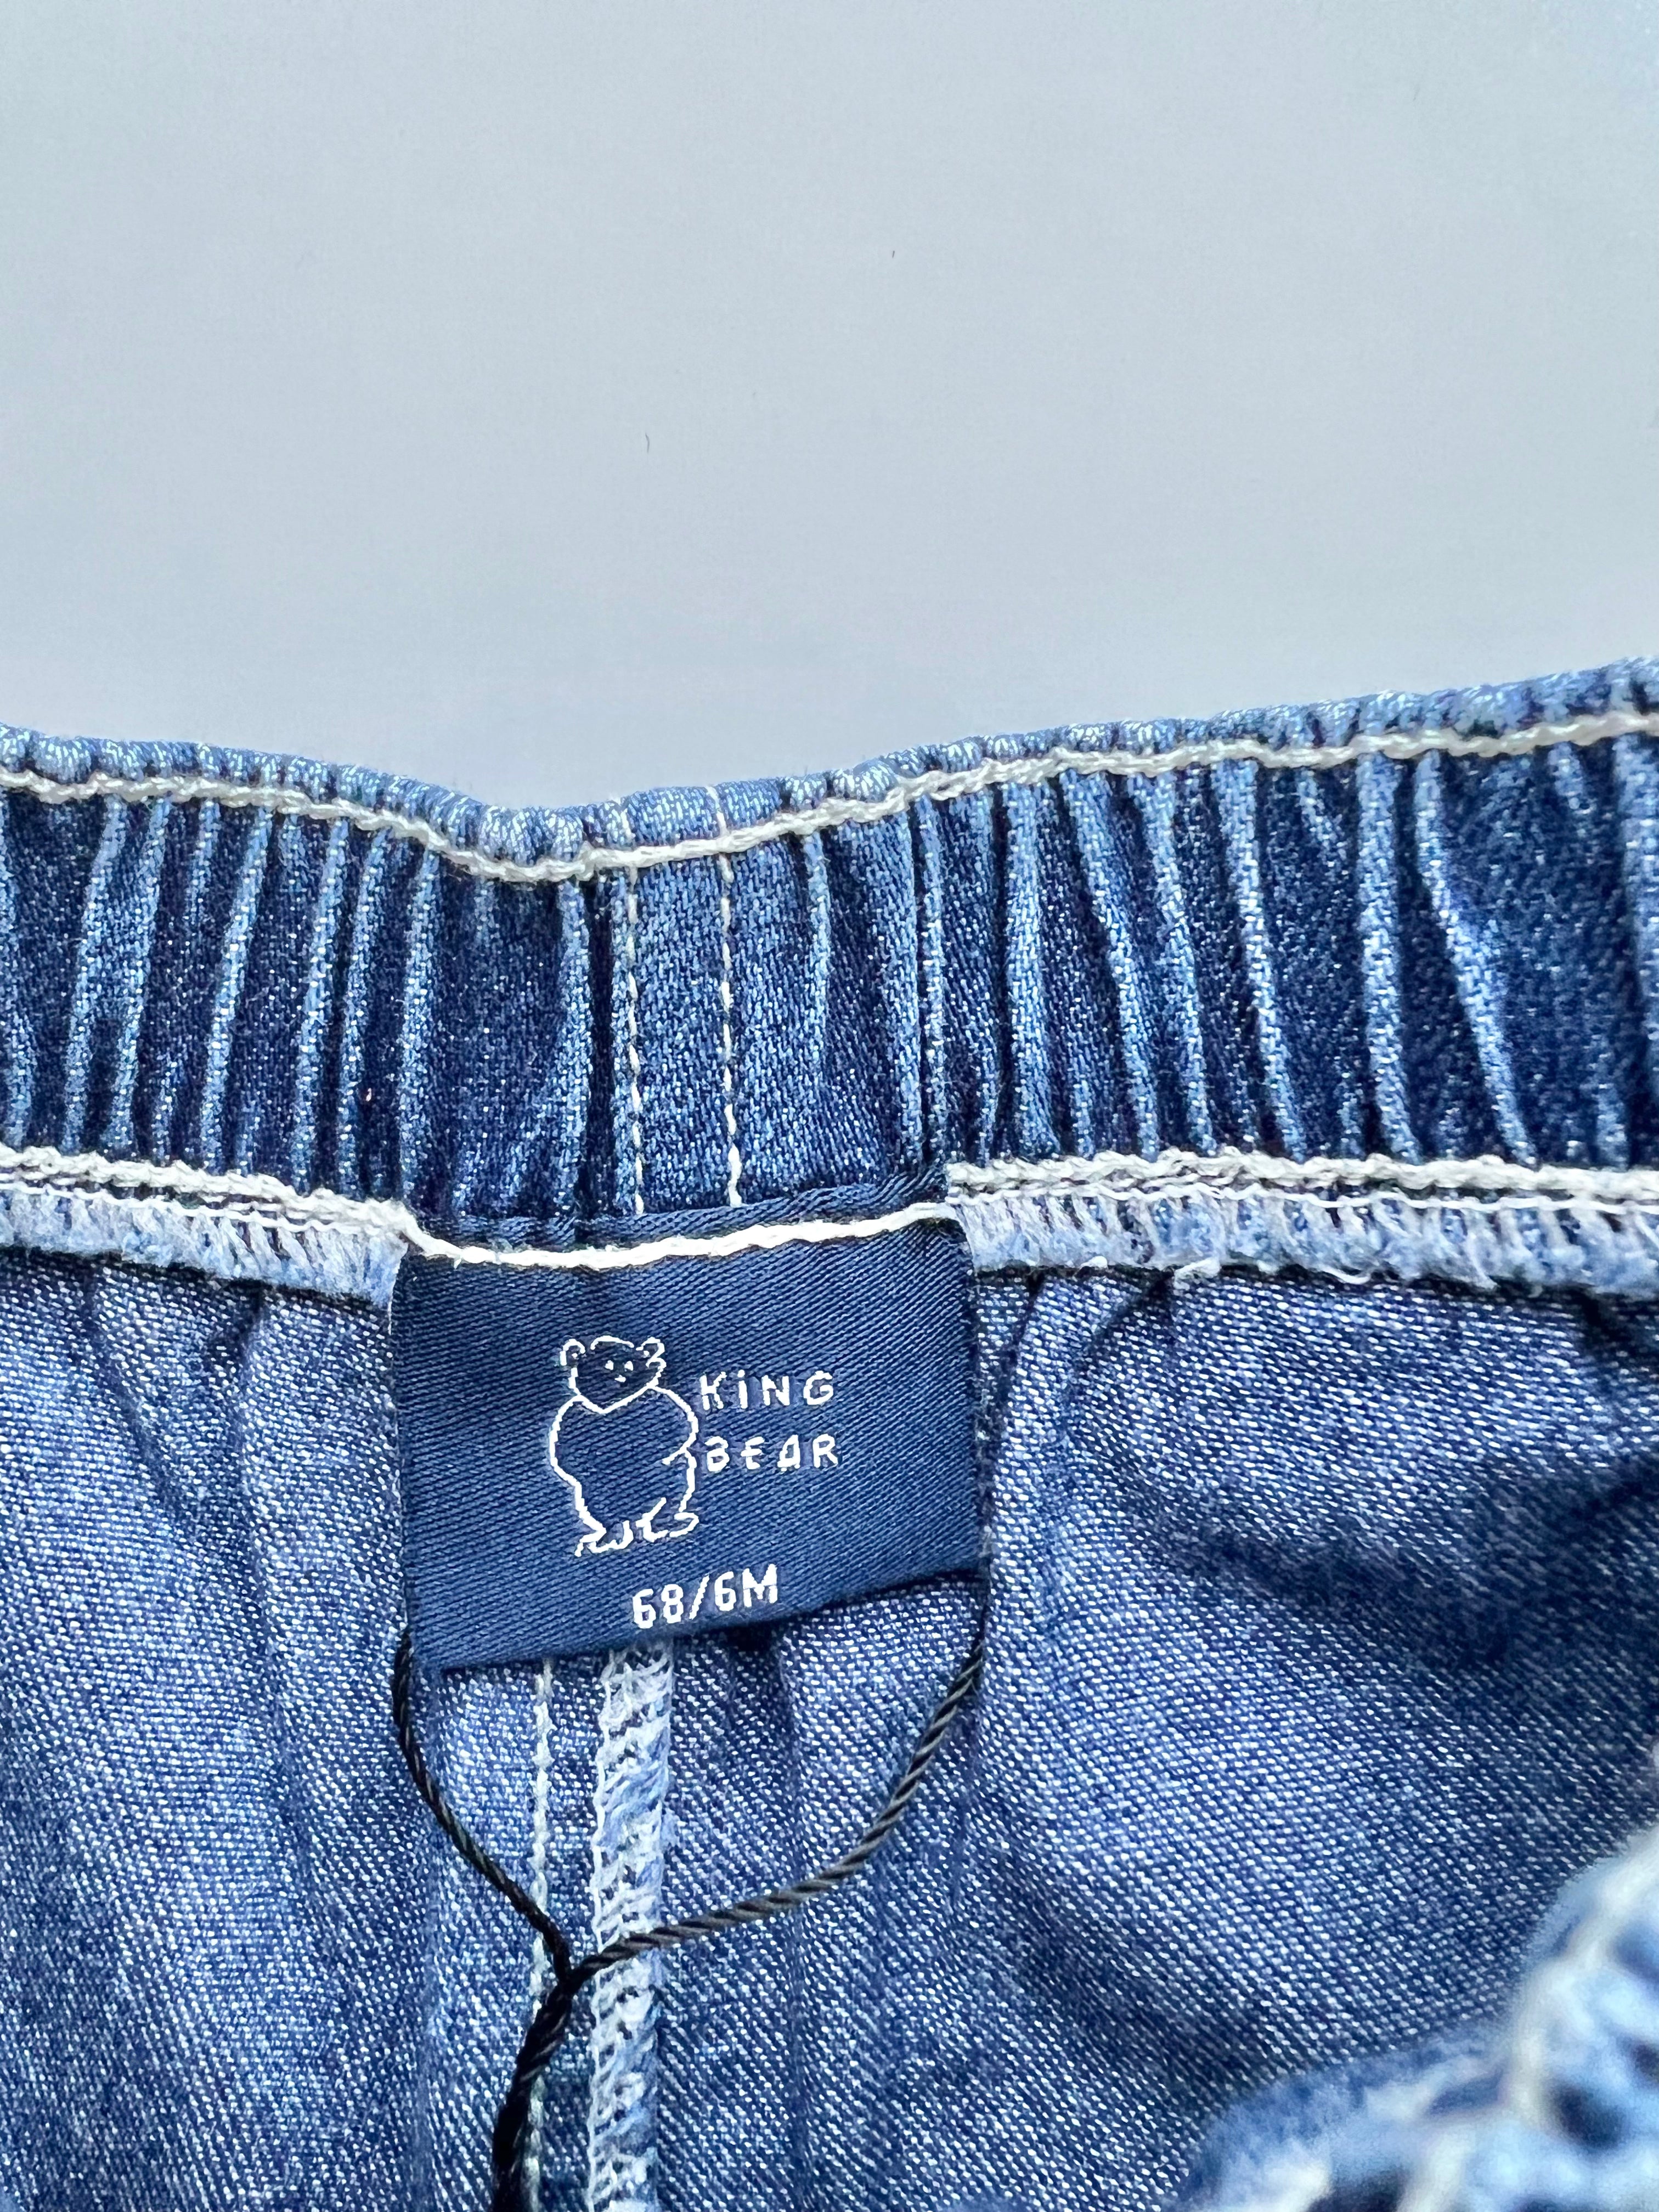 King Bear Cargo Jeans 3-6 Months